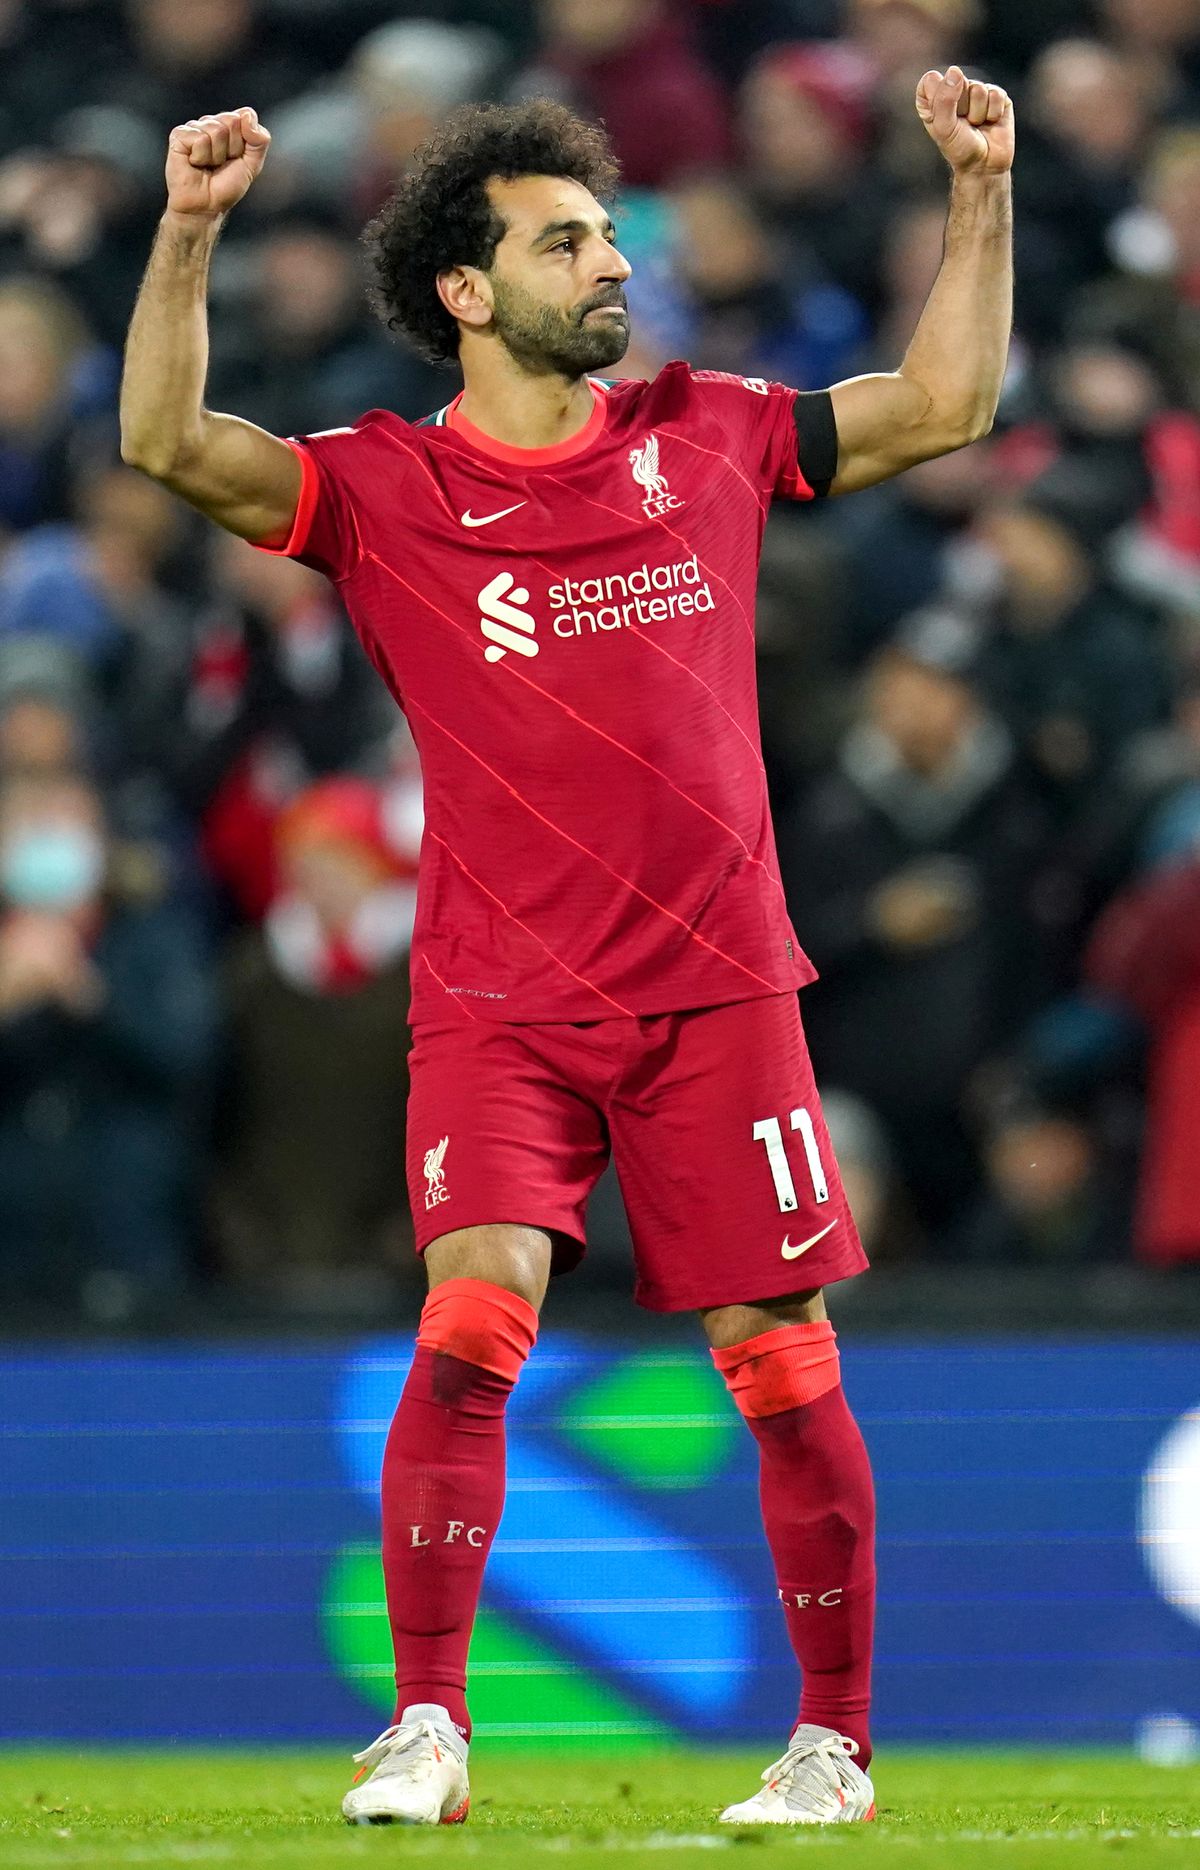 Conte praises Salah ahead of Liverpool's visit to Tottenham